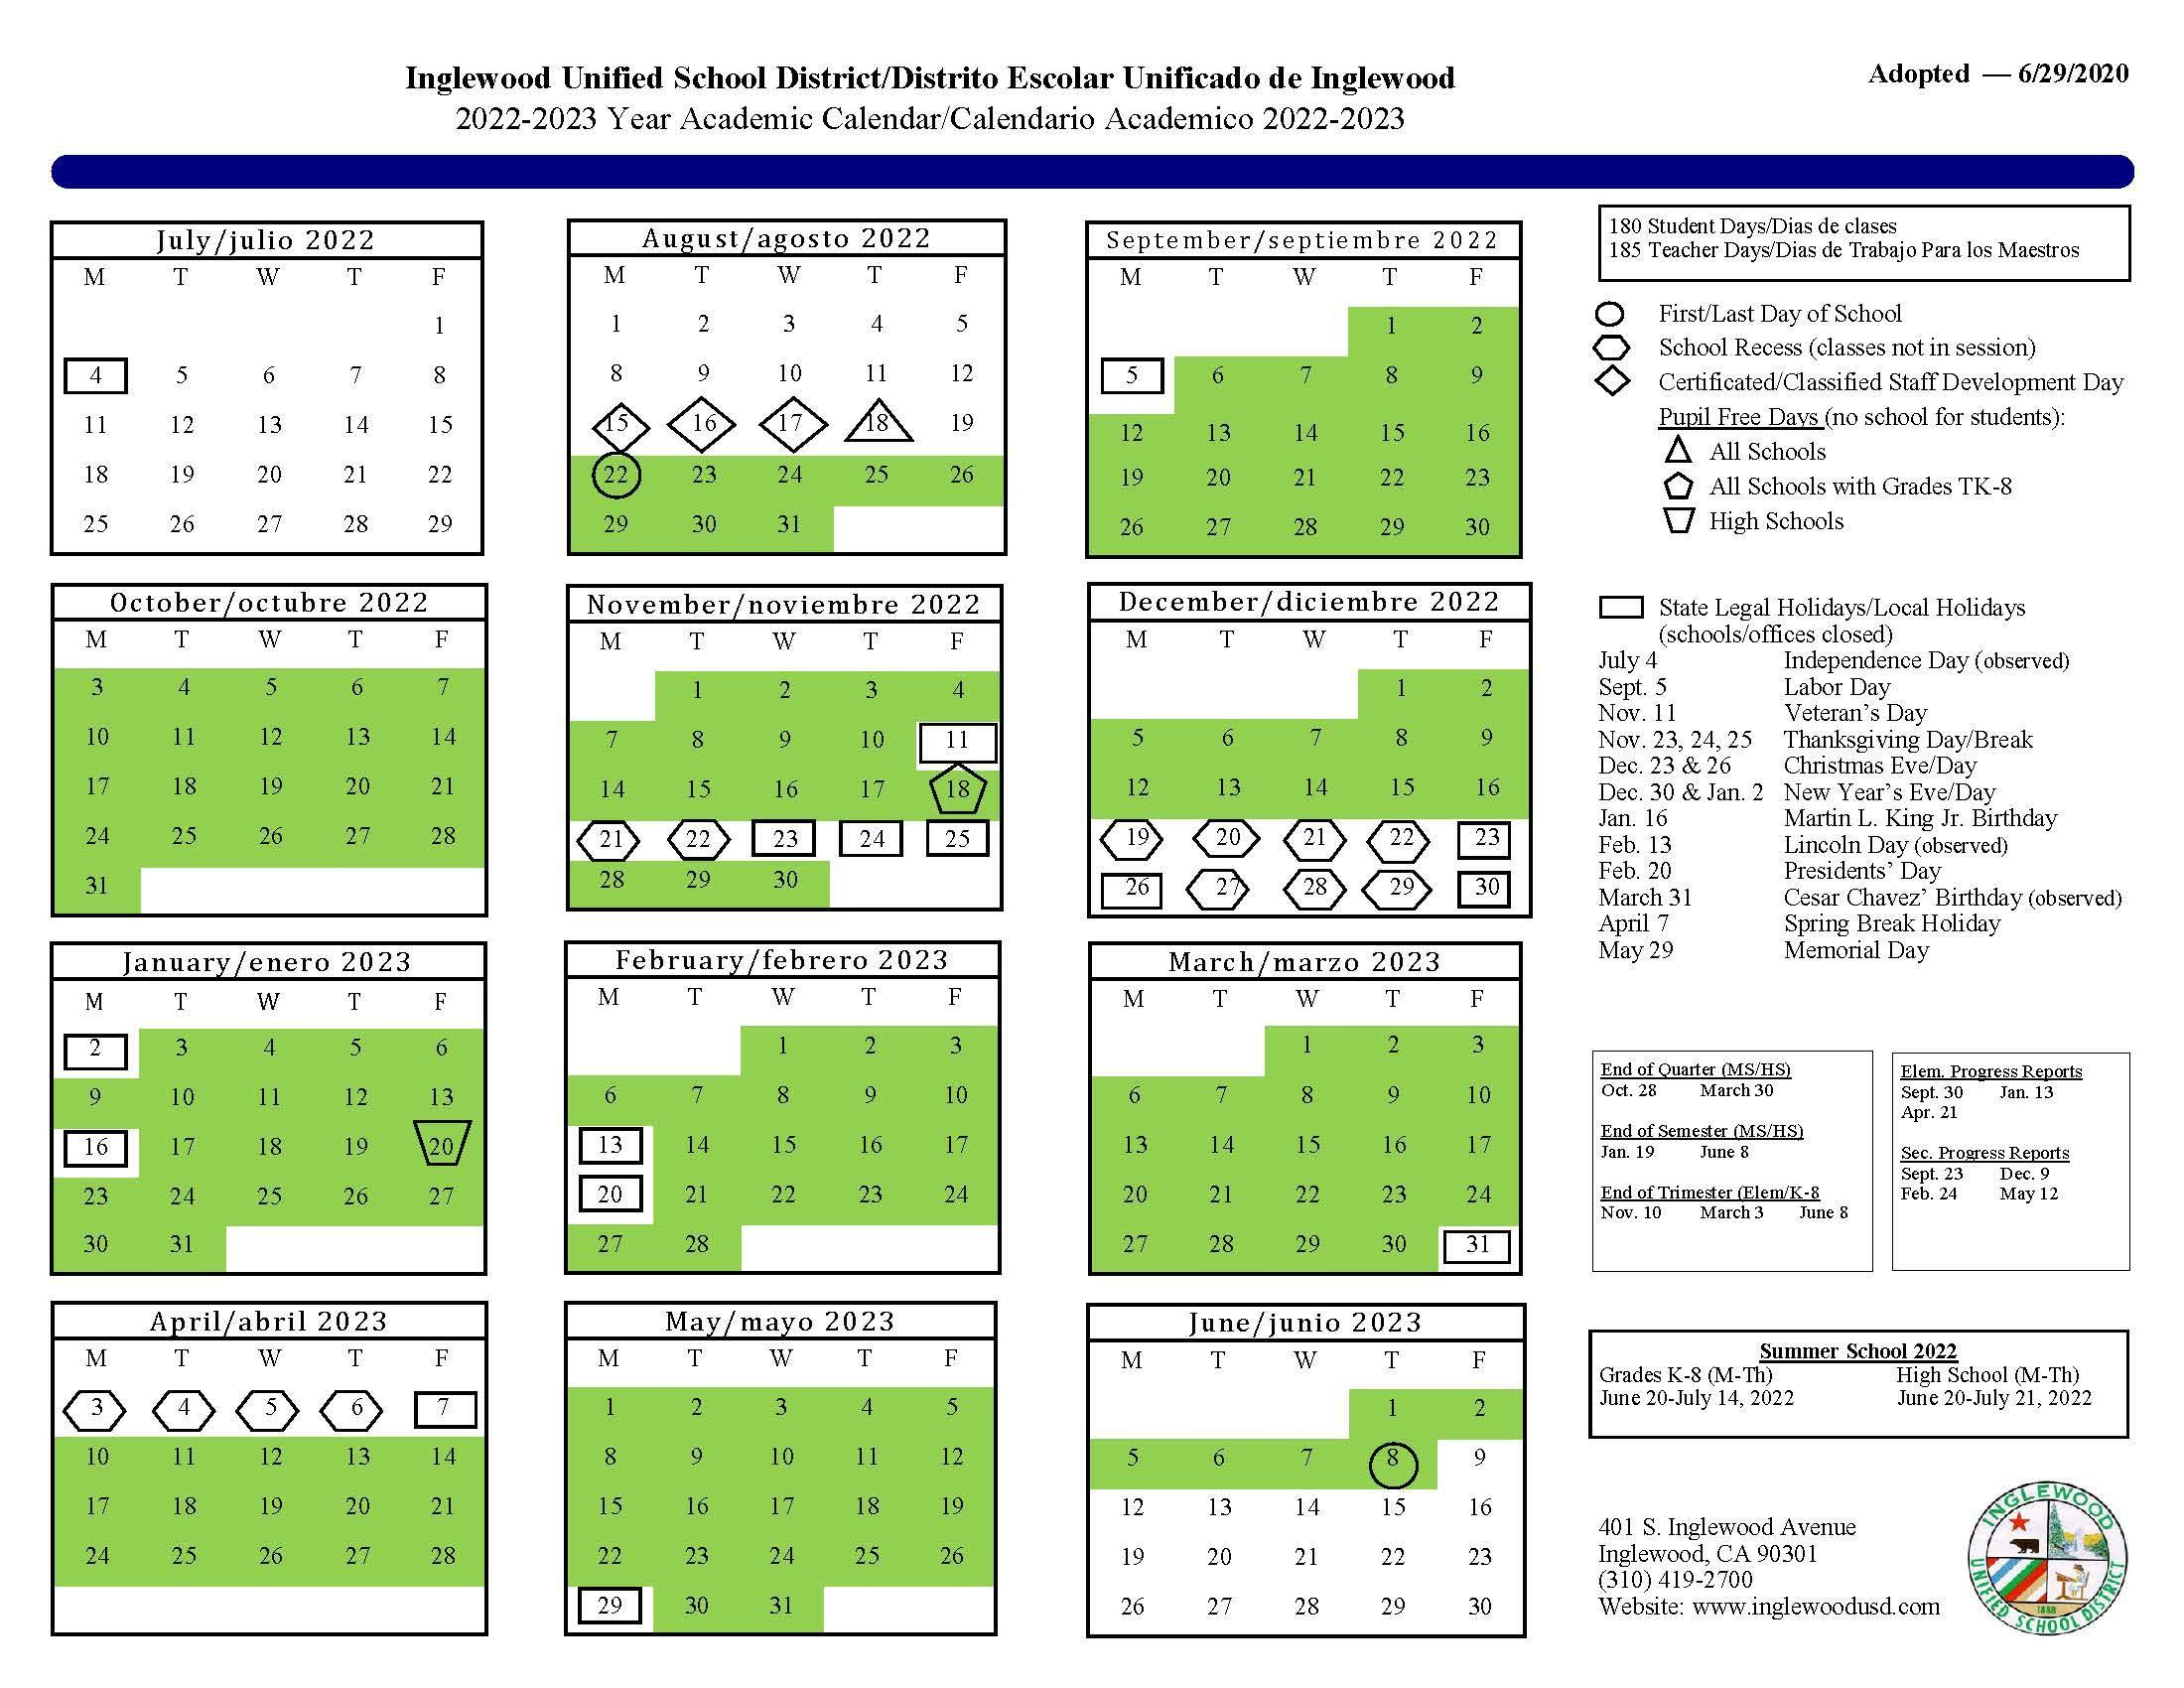 ccps-2024-school-calendar-image-to-u